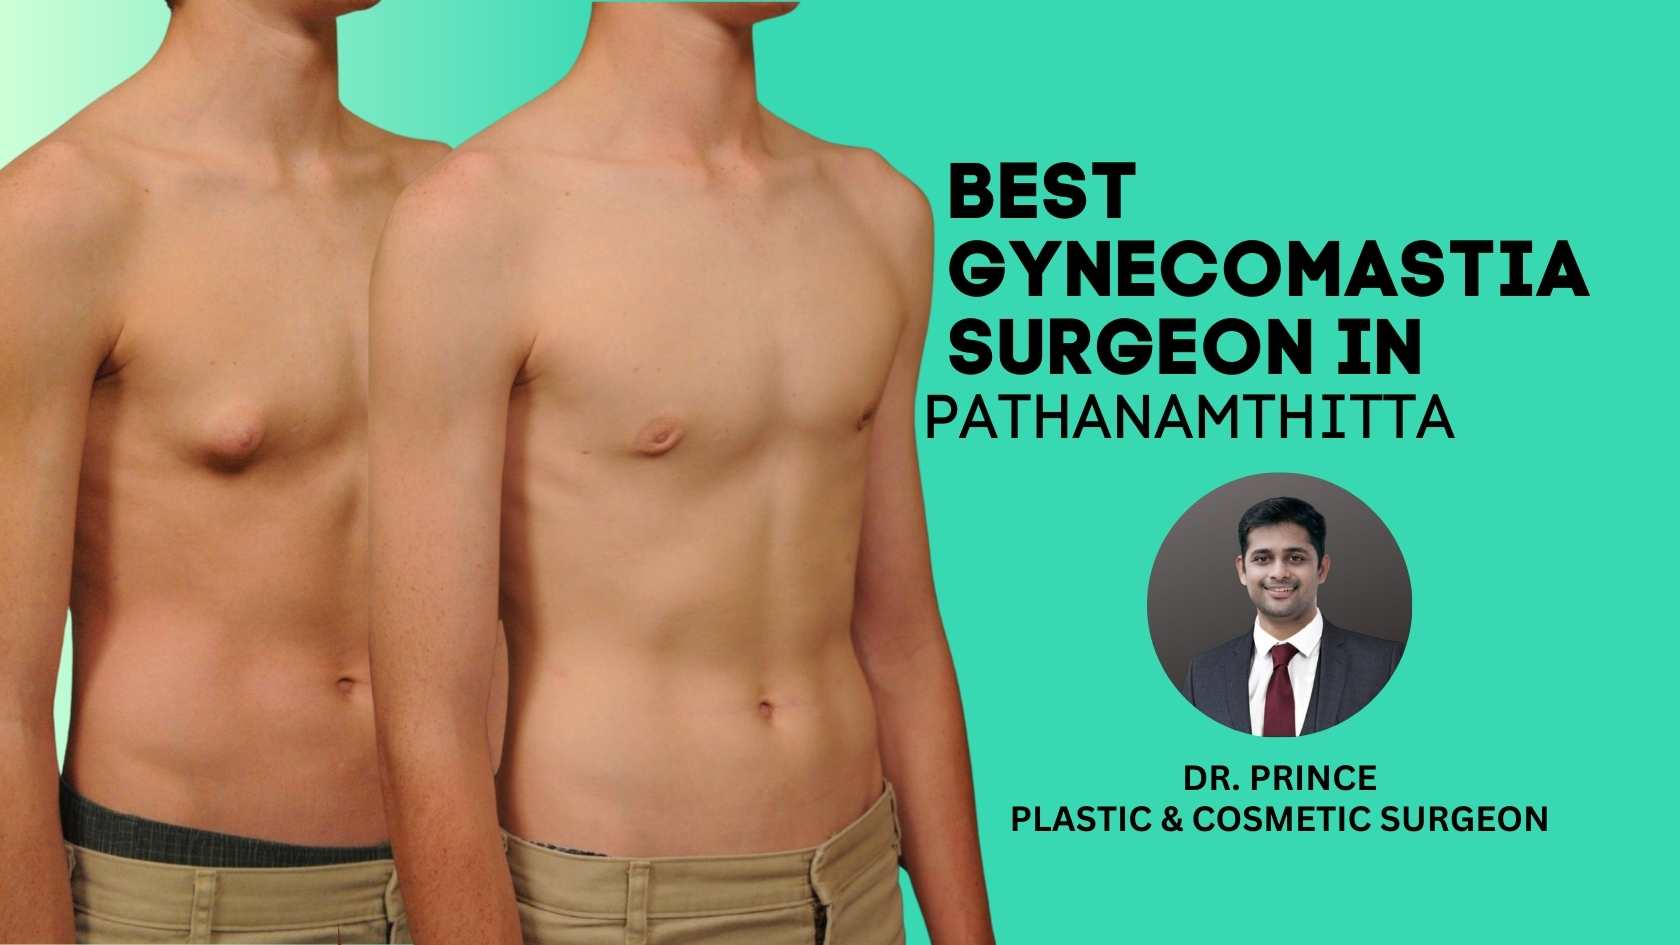 Dr. Prince, Renowned Gynecomastia Surgeon in Pathanamthitta